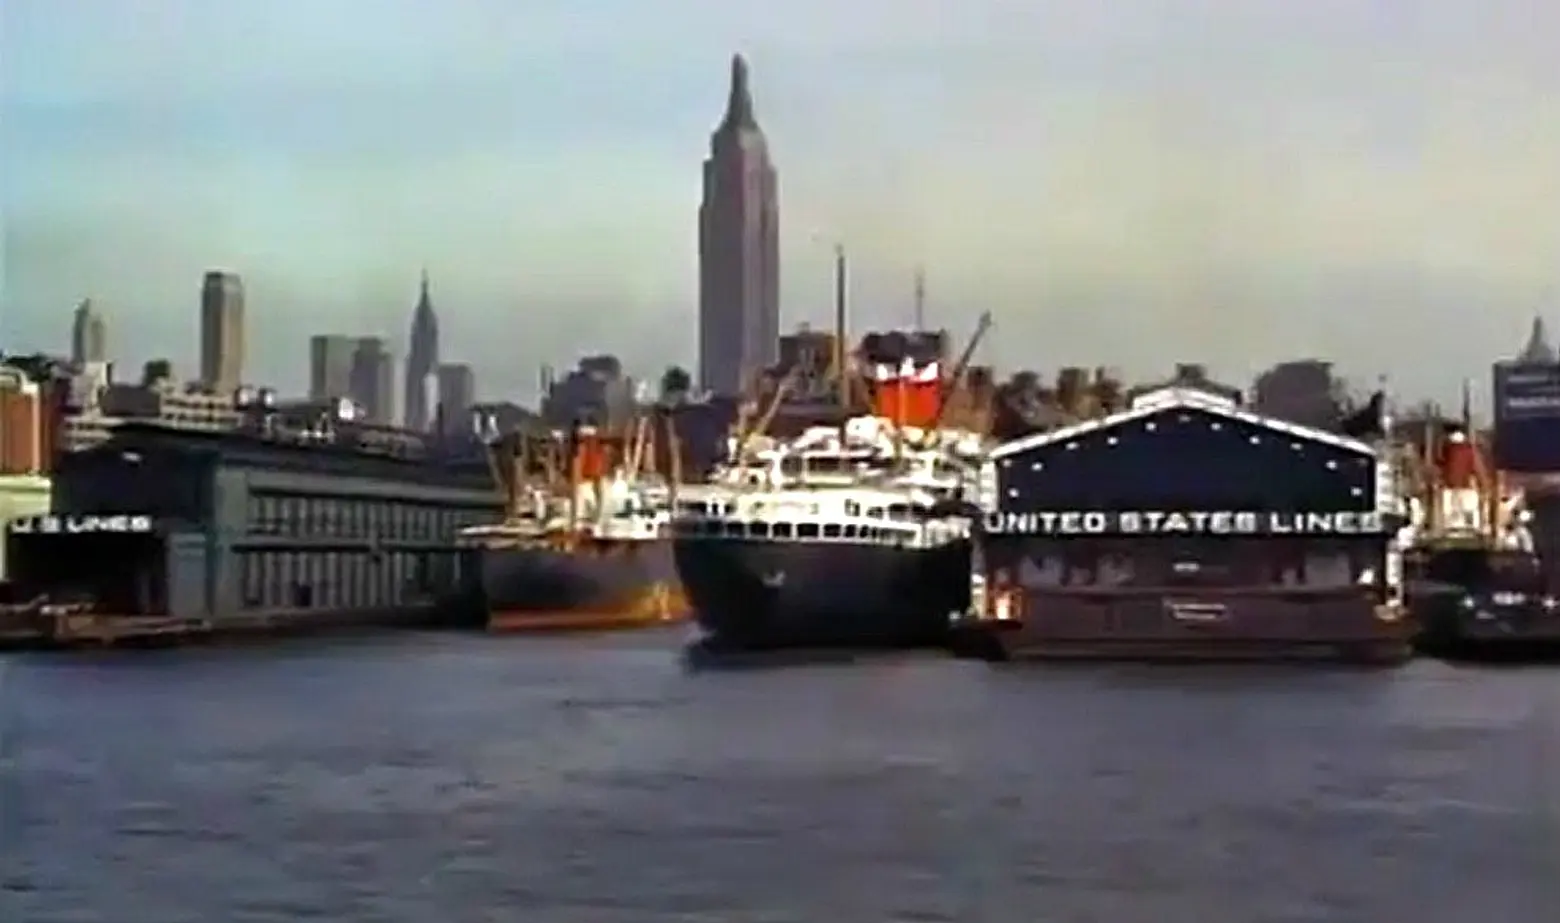 Mighty Manhattan – New York’s Wonder City, Technicolor, vintage Manhattan, Chelsea Piers